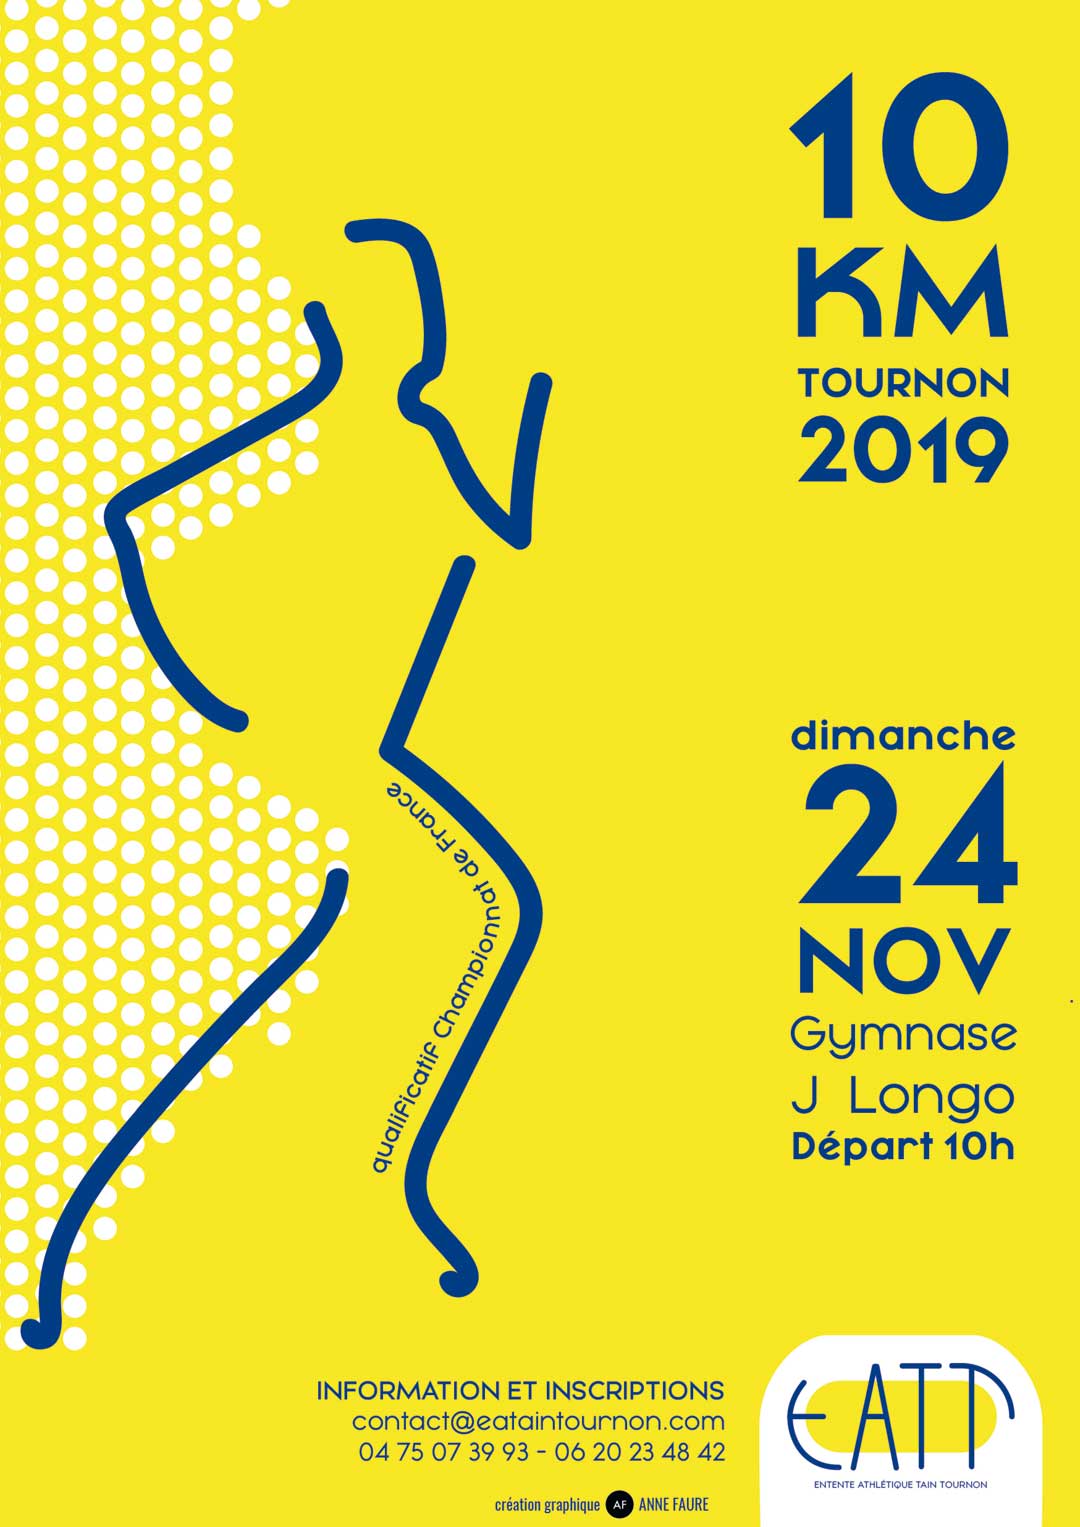 10 KMS DE TOURNON. Dimanche 24 novembre 2019.